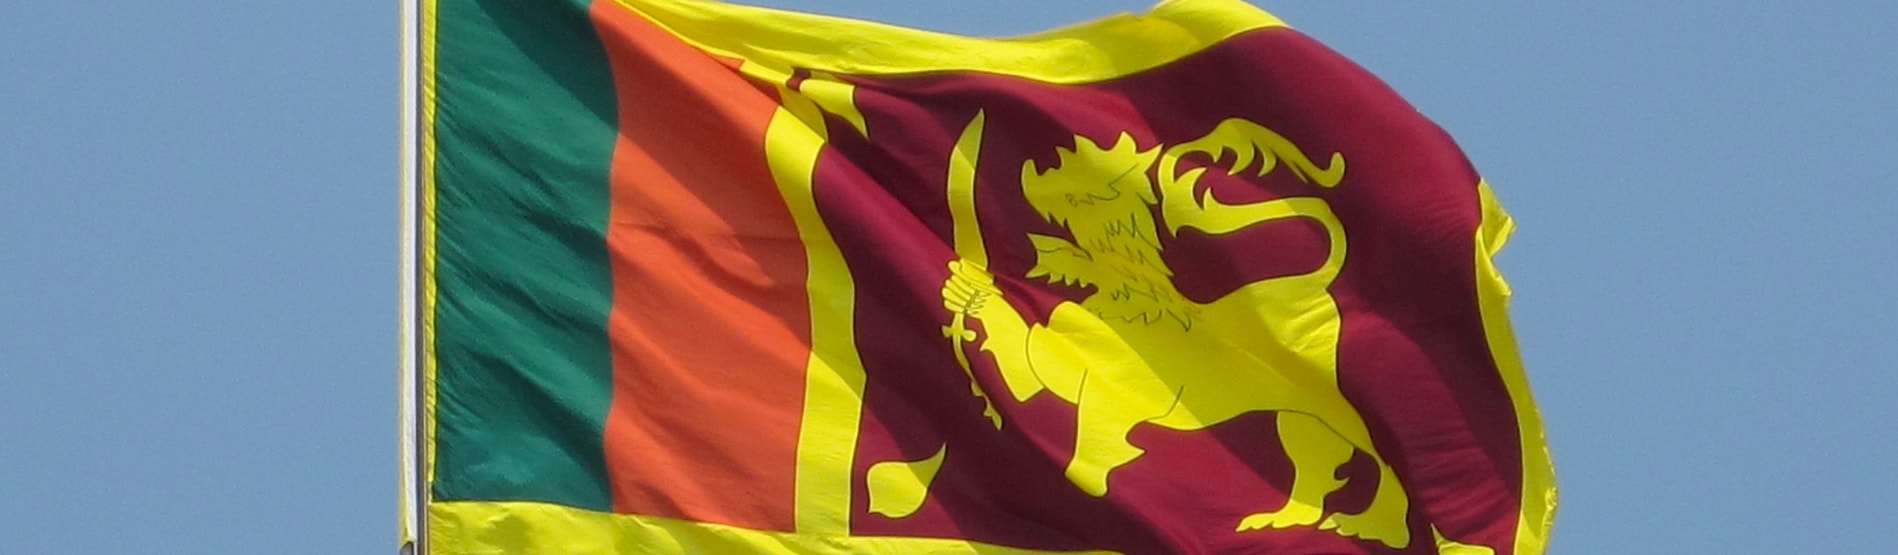 Sri Lankan flag waving in the breeze.